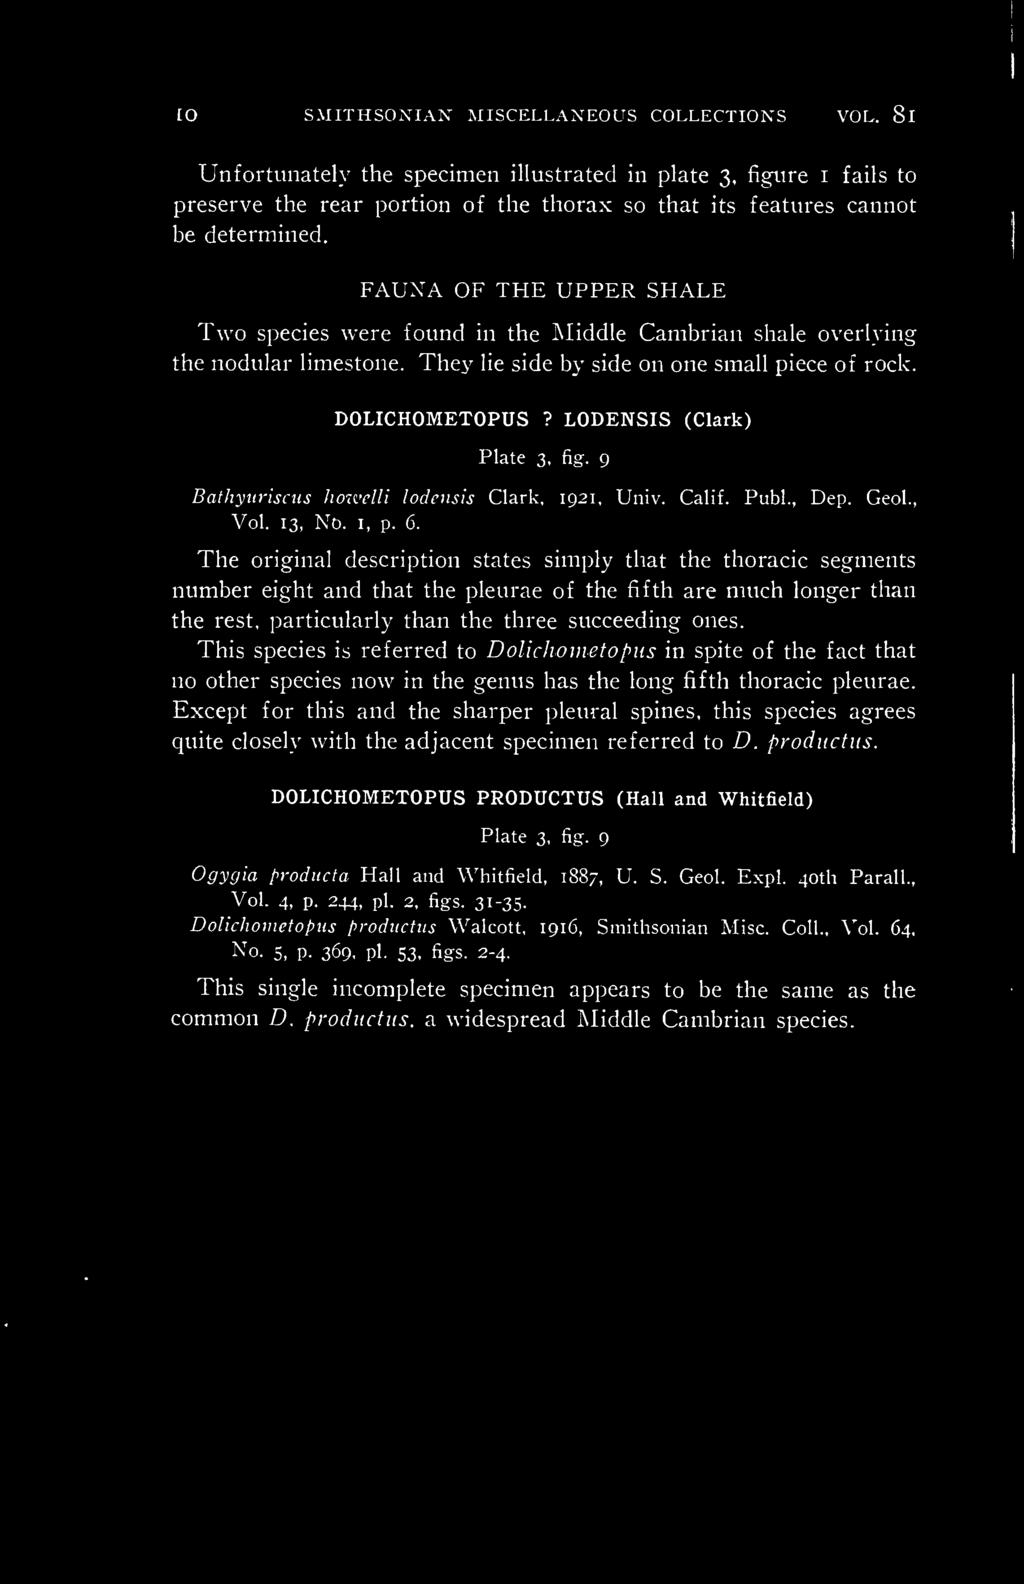 LODENSIS (Clark) Plate 3, fig. 9 Bathyuriscus howelli lodensis Clark, 1921, Univ. Calif. Pub!., Dep. Geo!., Vol. 13, No. I, p. 6.